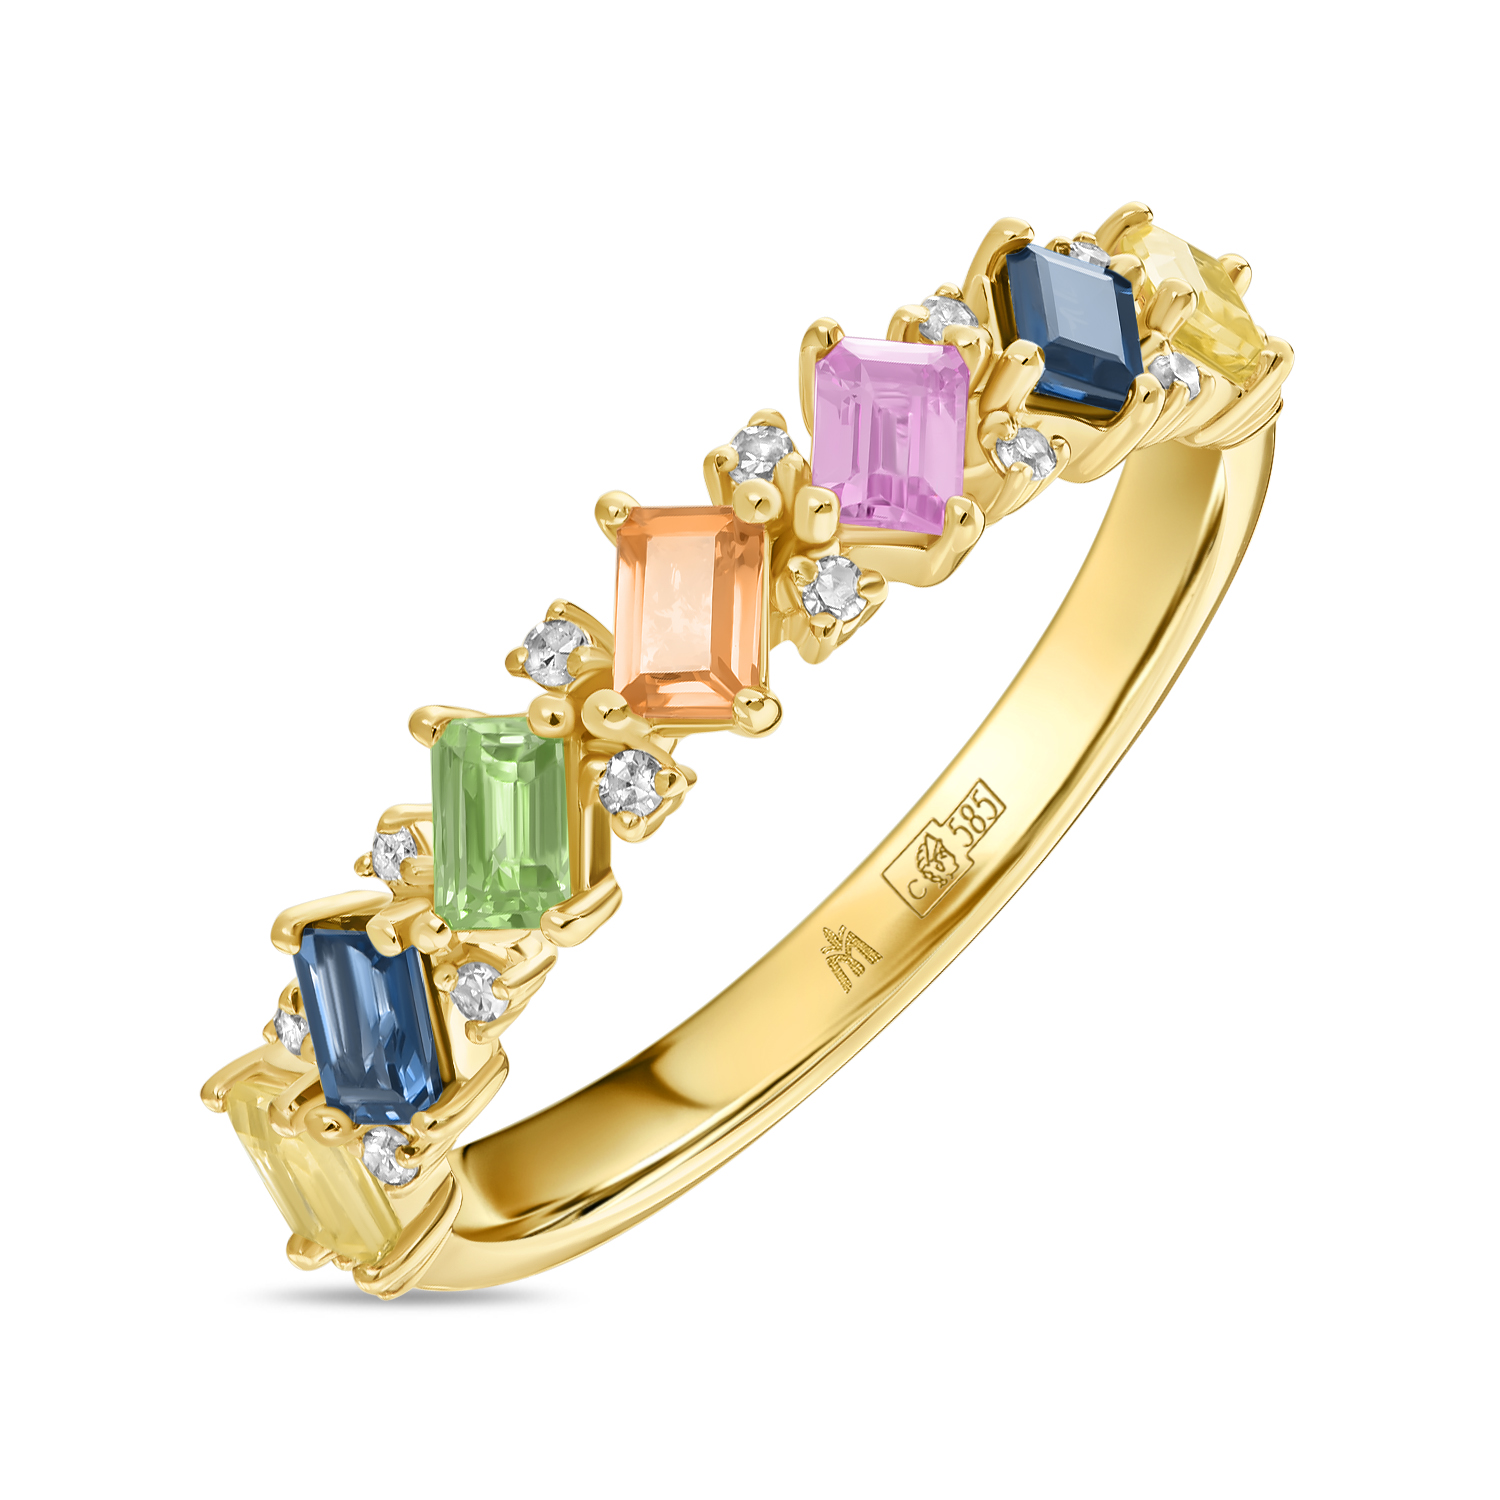 Кольца МЮЗ Кольцо с бриллиантами, сапфирами и цветными сапфирами miuz ru кольцо c бриллиантами и цветными сапфирами